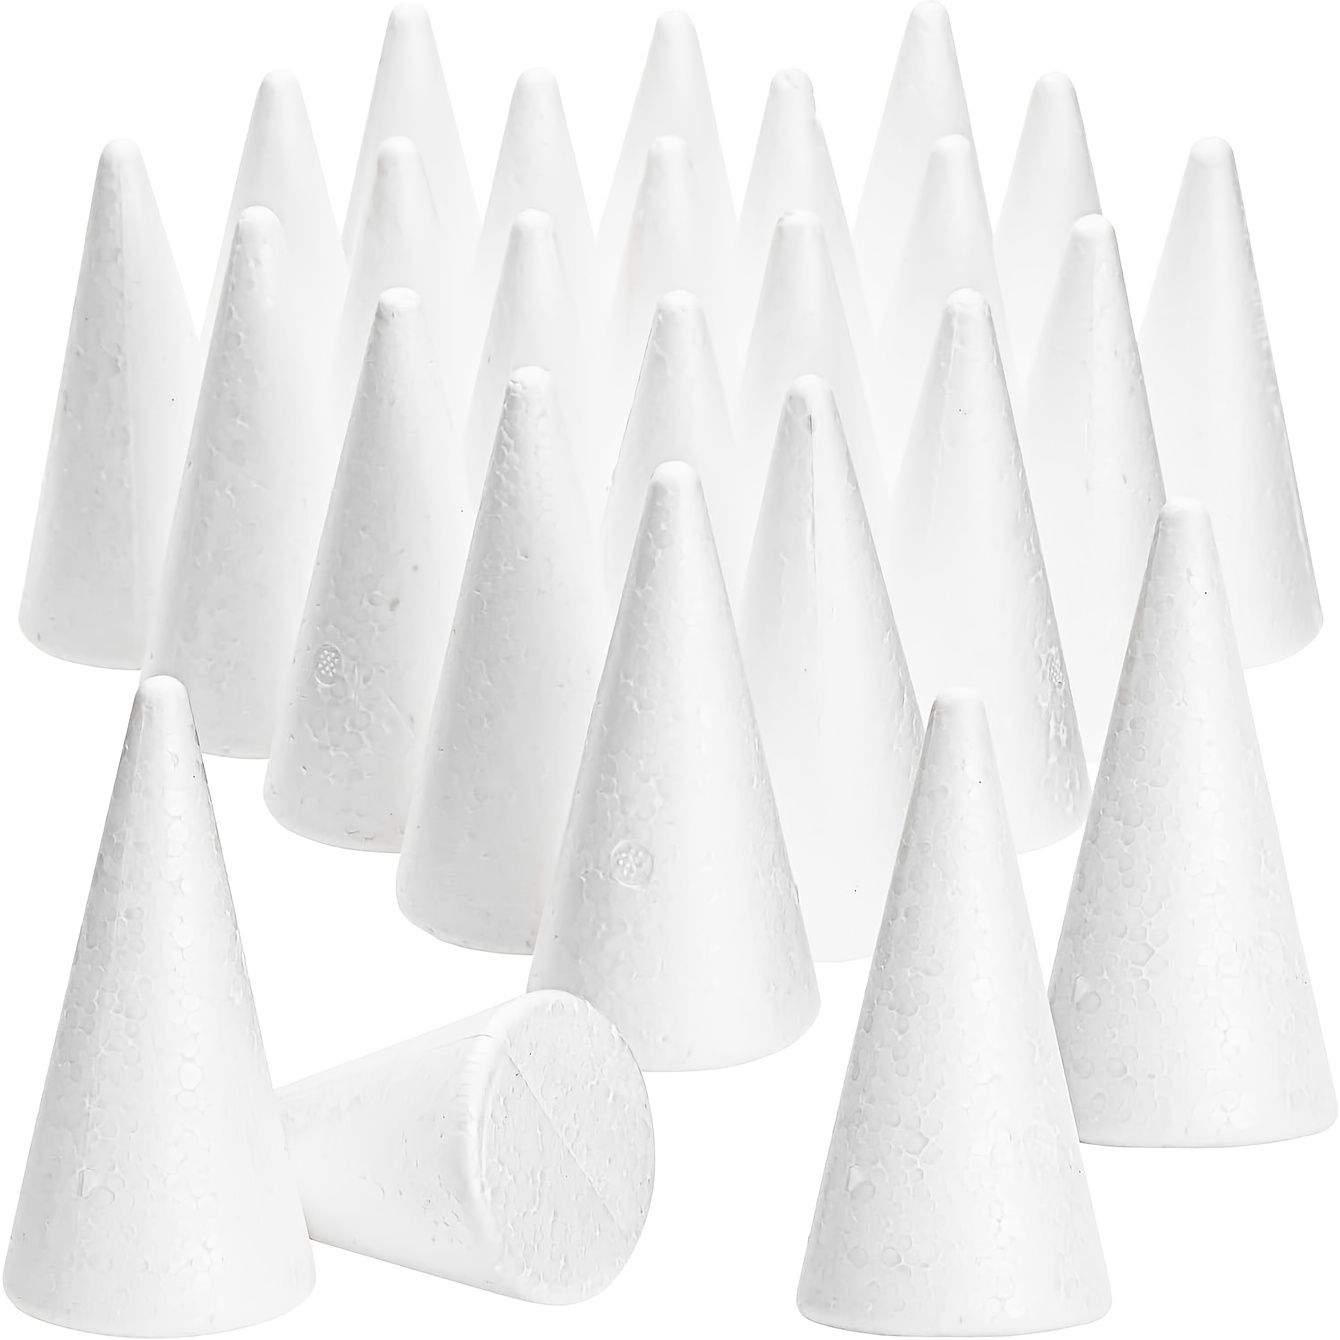 30pcs White Cone Shape Christmas Tree Polystyrene Cone Foam